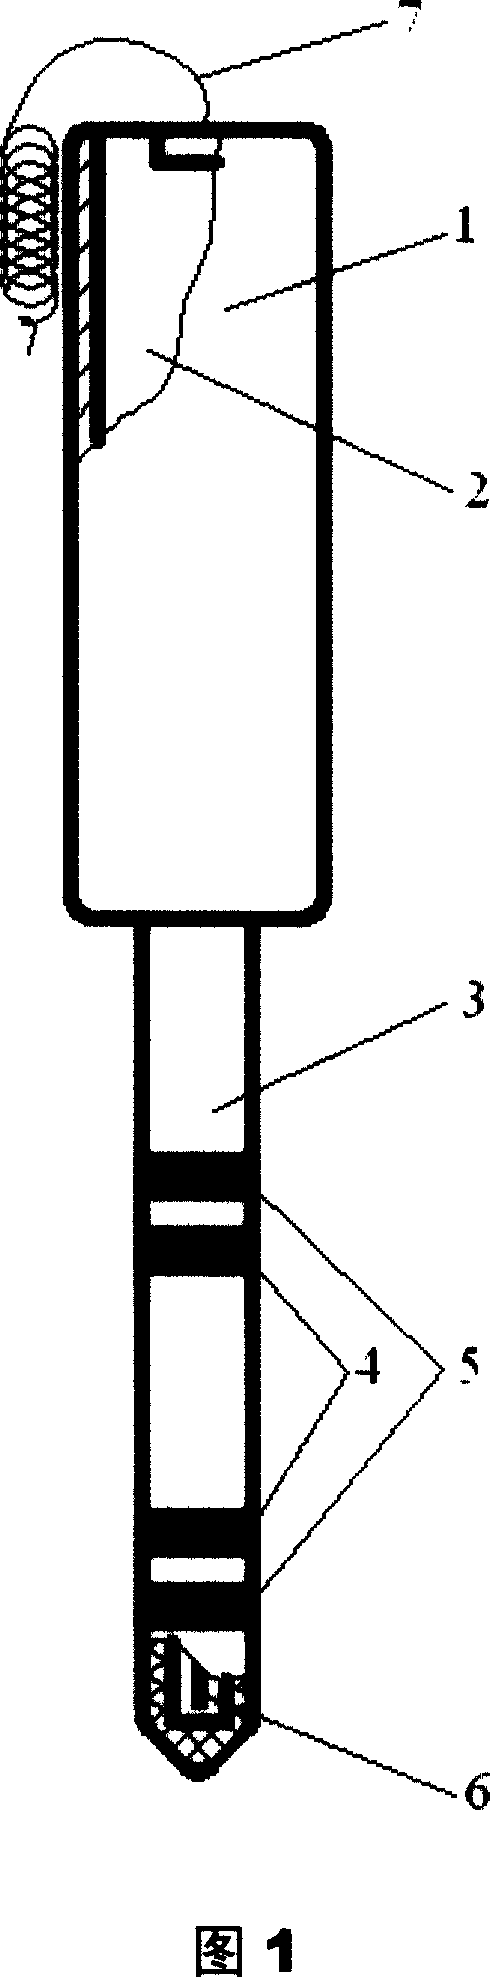 Original position soil salt content sensing transducer